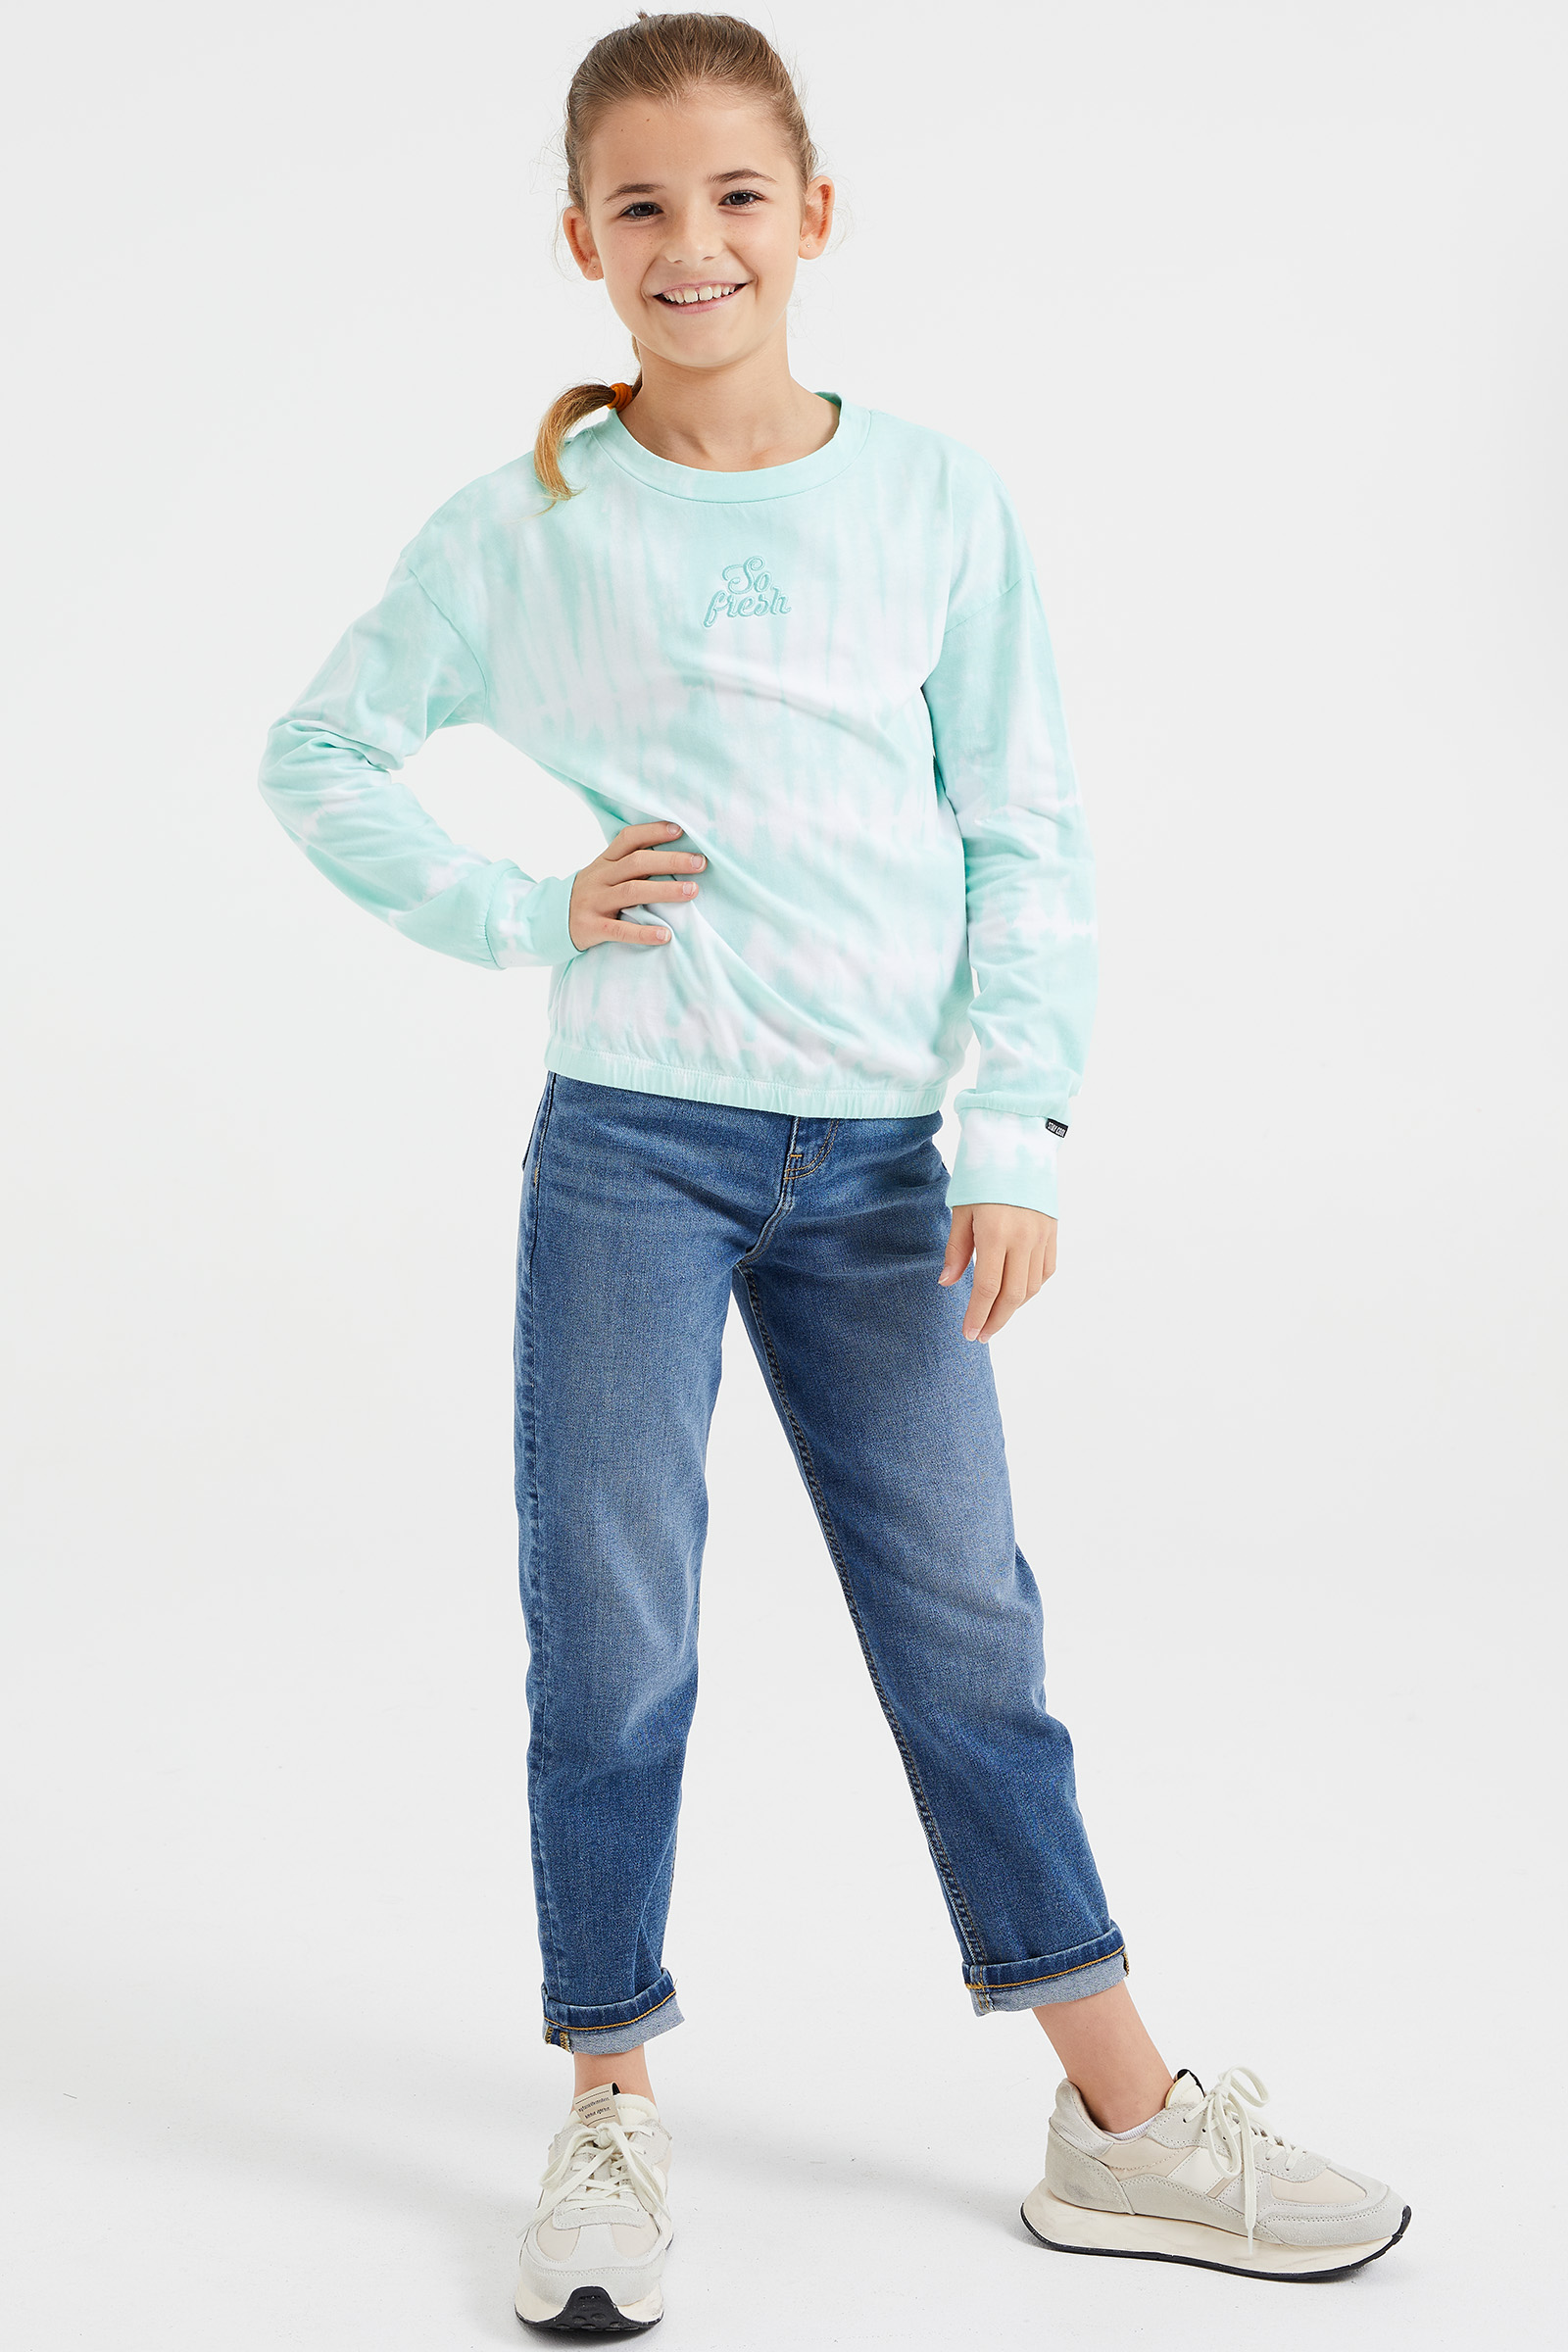 Kleding Unisex kinderkleding Tops & T-shirts Tie Dye T-Shirt Baby grootte 0000 100% katoen blauw en paars TDC017 